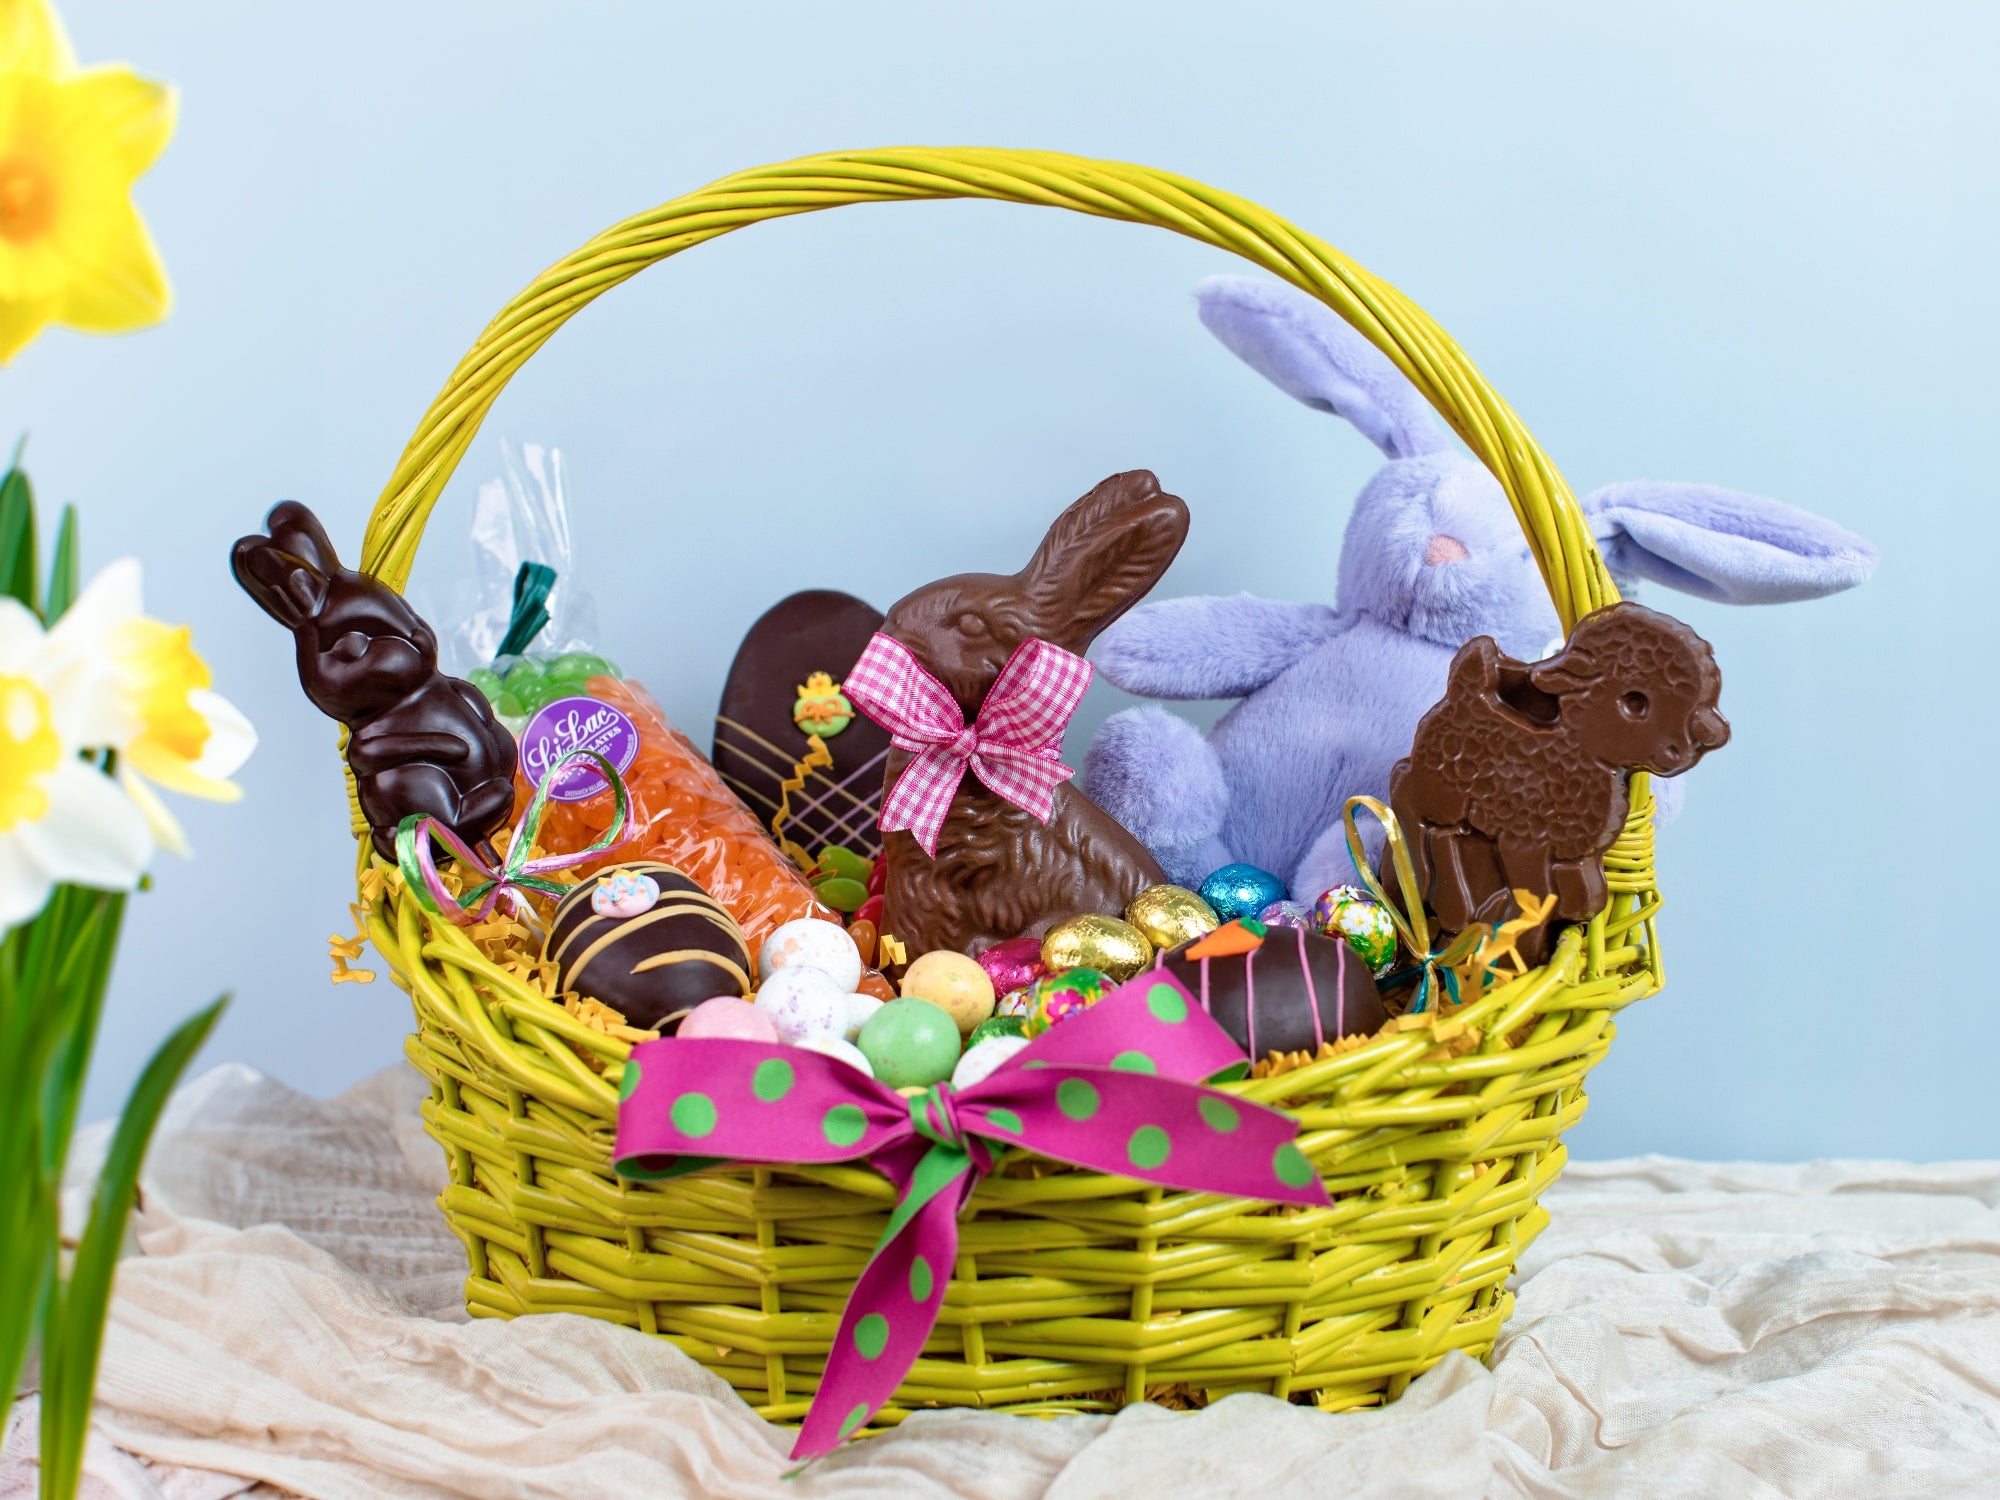 Deluxe Gourmet Chocolate Easter Basket (11 items)